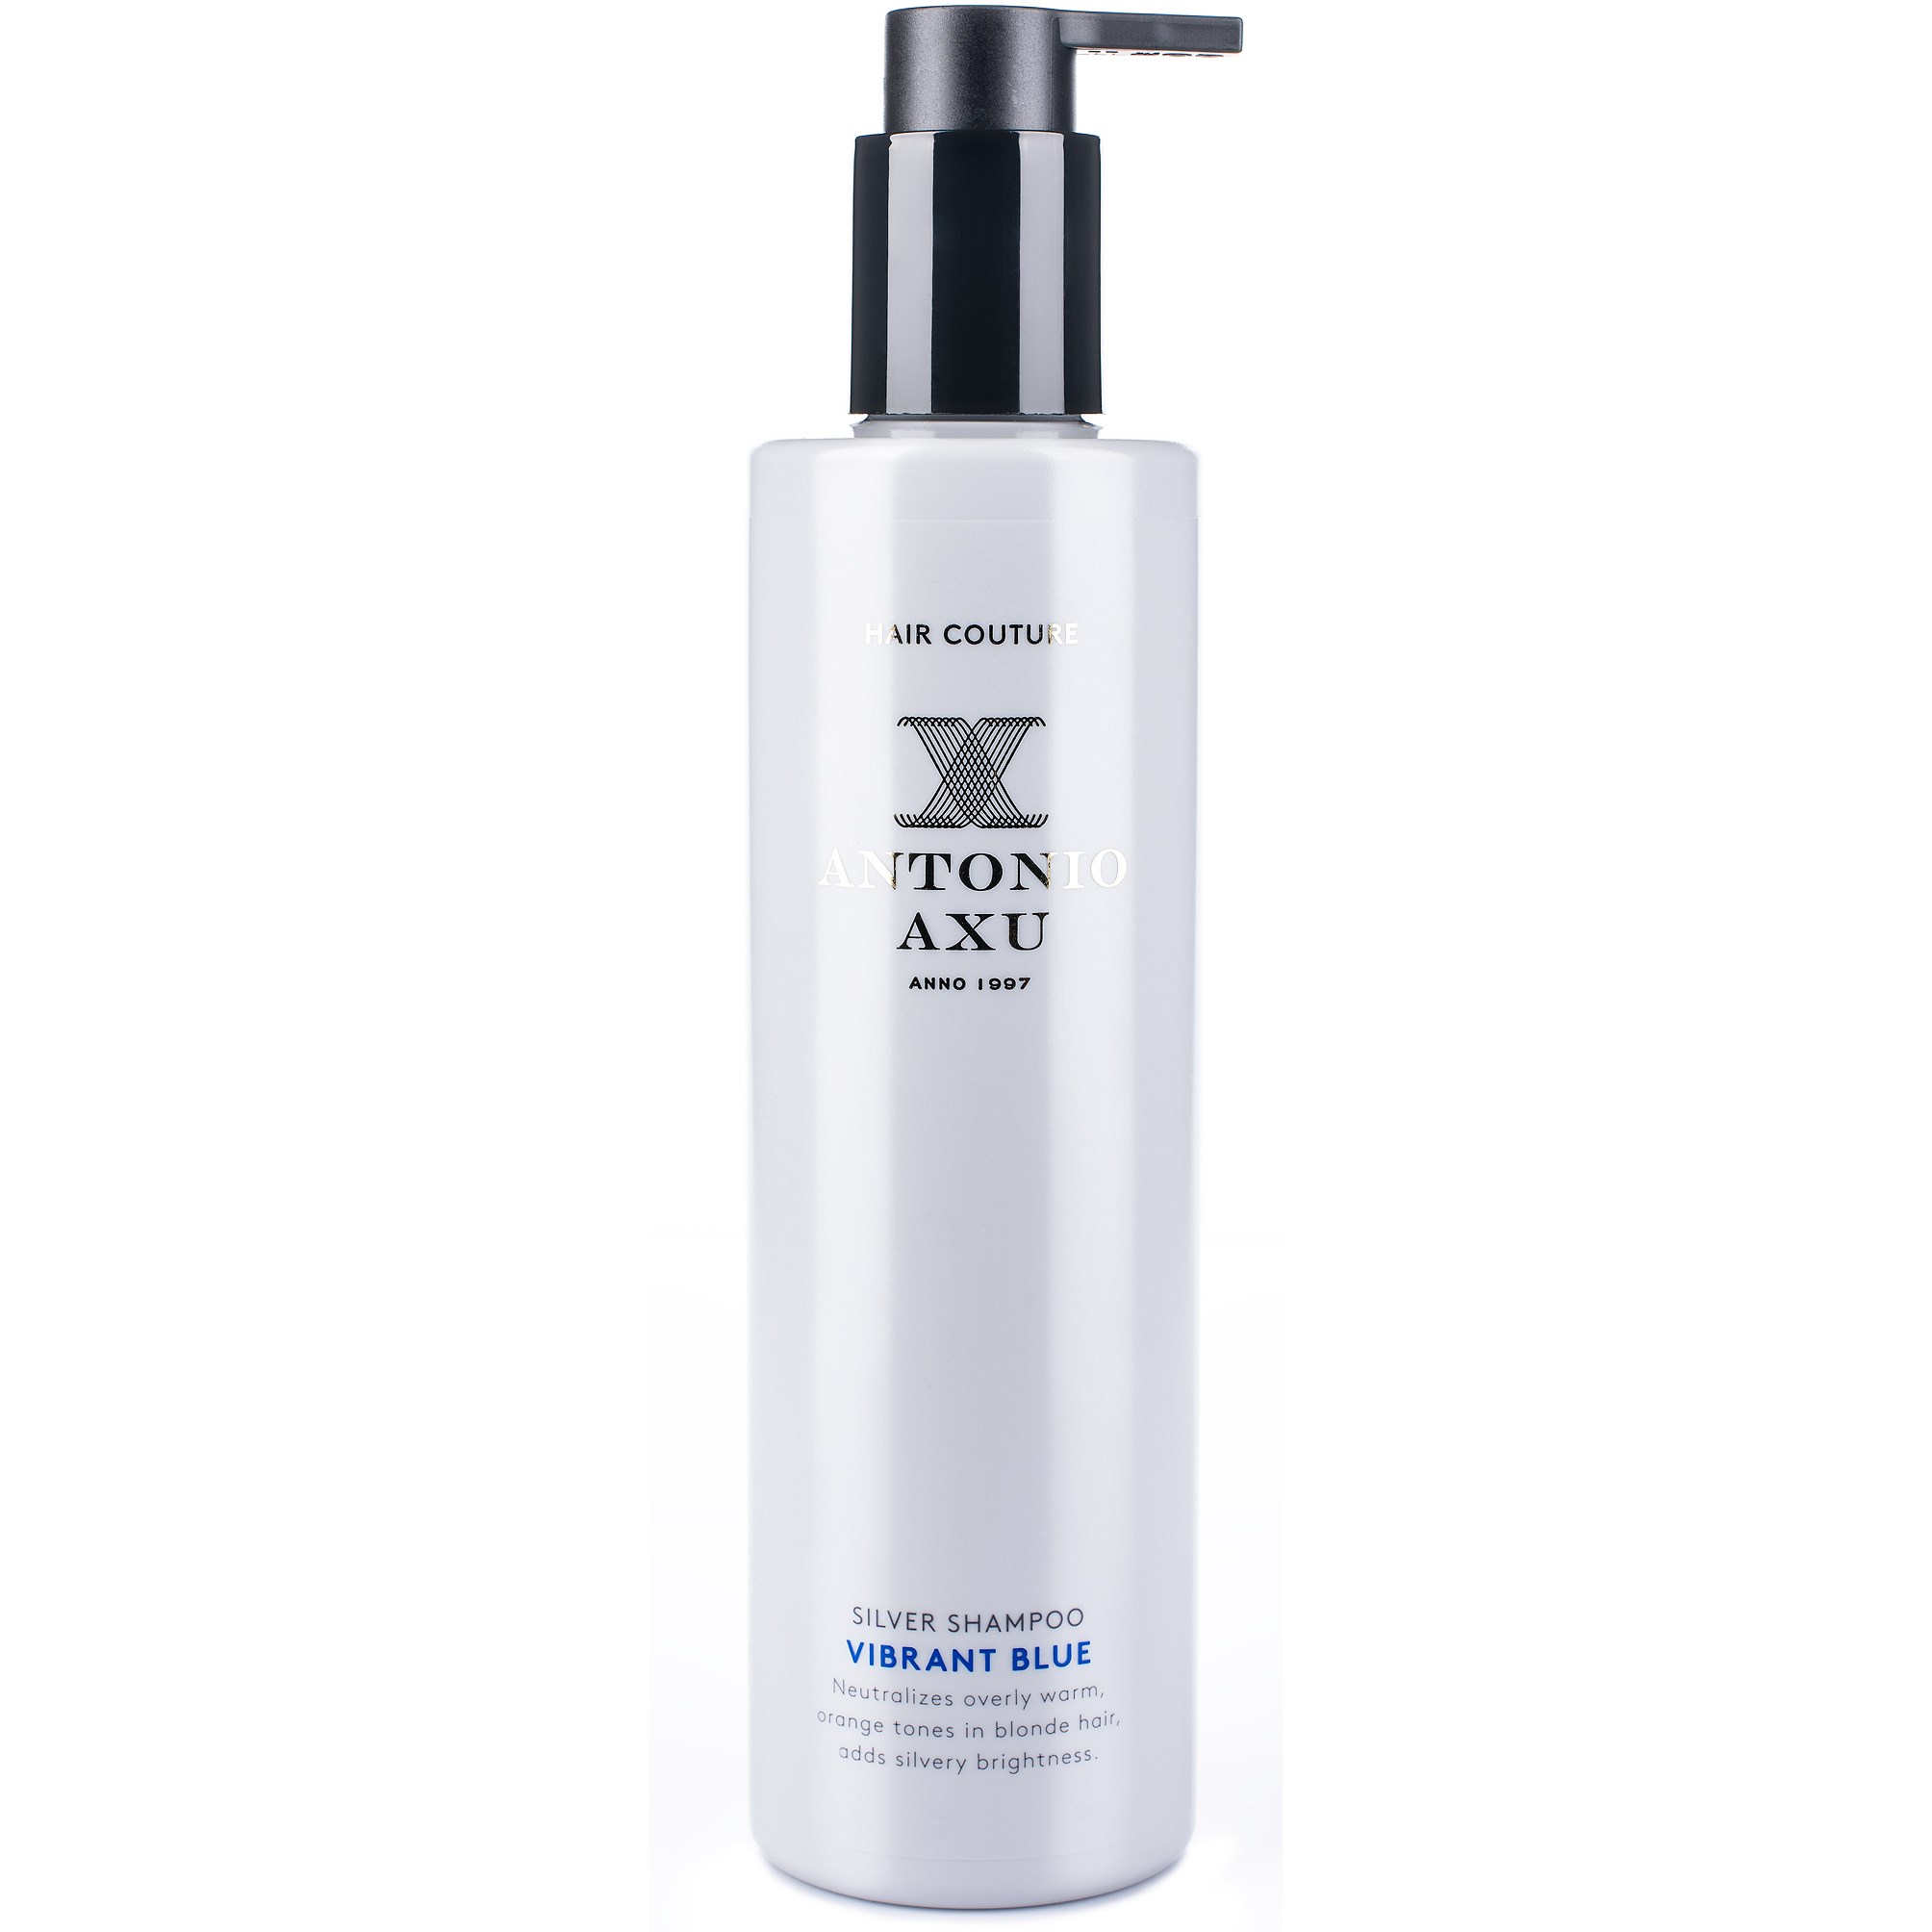 Läs mer om Antonio Axu Silver Shampoo Vibrant Blue 300 ml